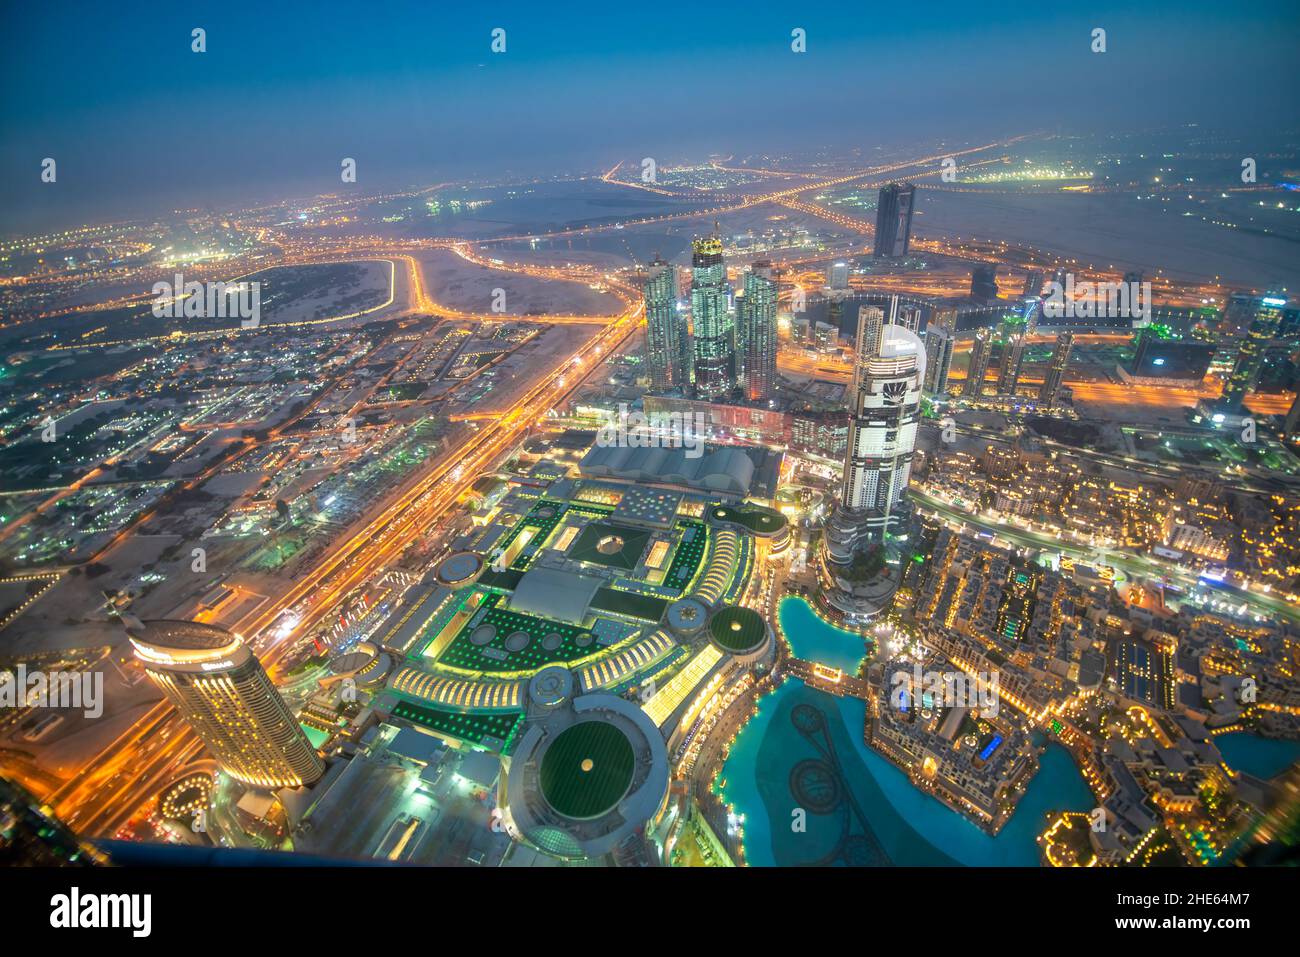 DUBAI, UAE - DECEMBER 4, 2016: Aerial view of Downtown Dubai at sunset Stock Photo